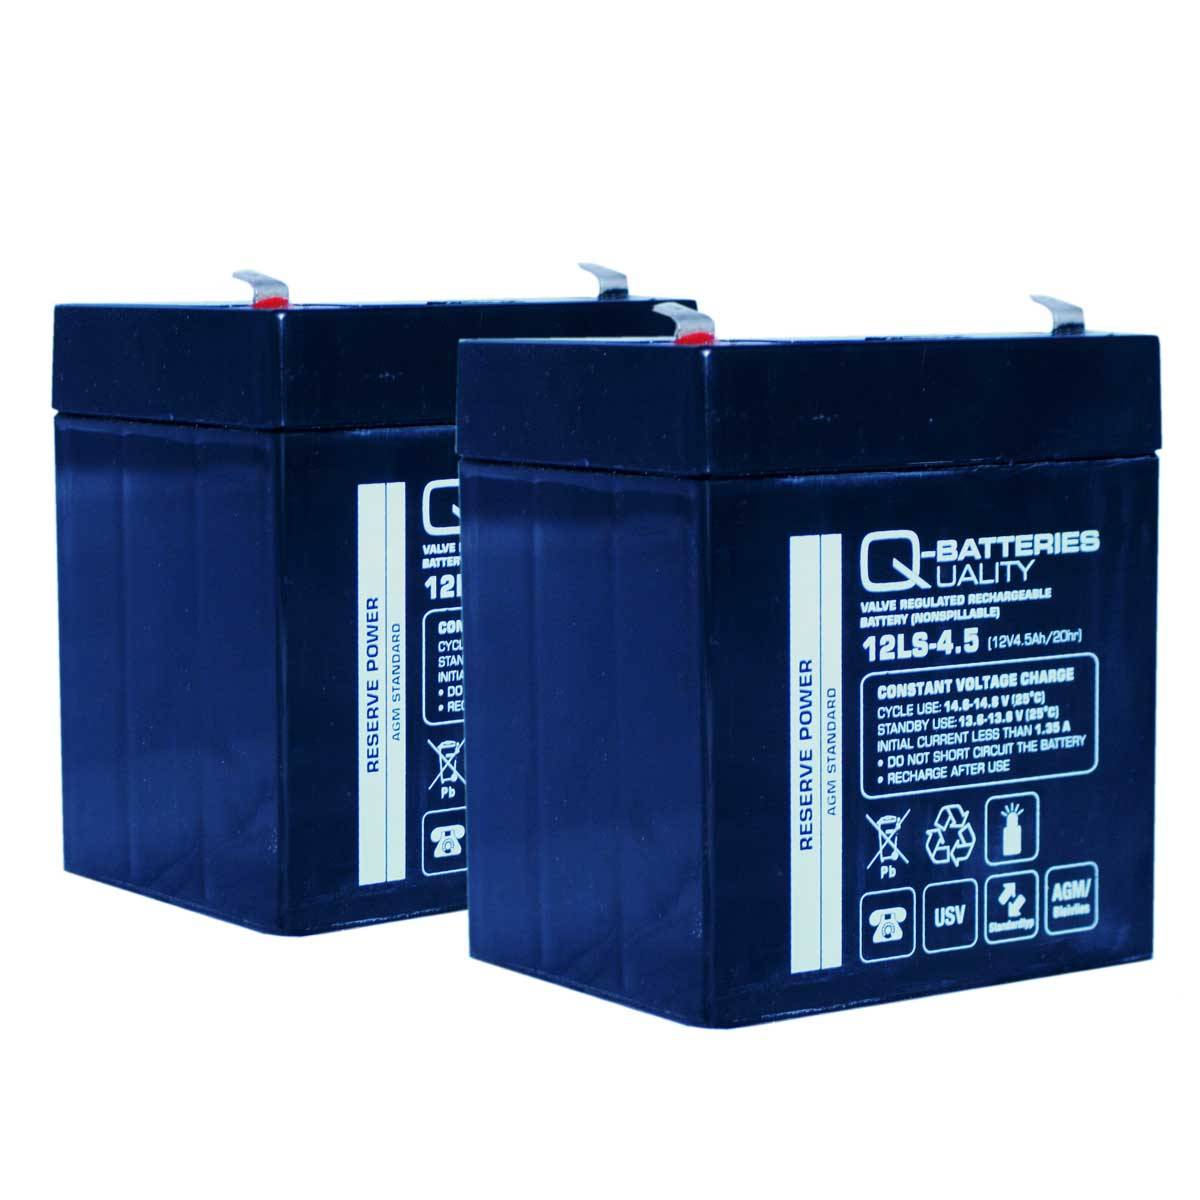 Q-Batteries Batteria di ricambio per montascale e sollevatori di pazienti 24V 4.5Ah (2 x12V)